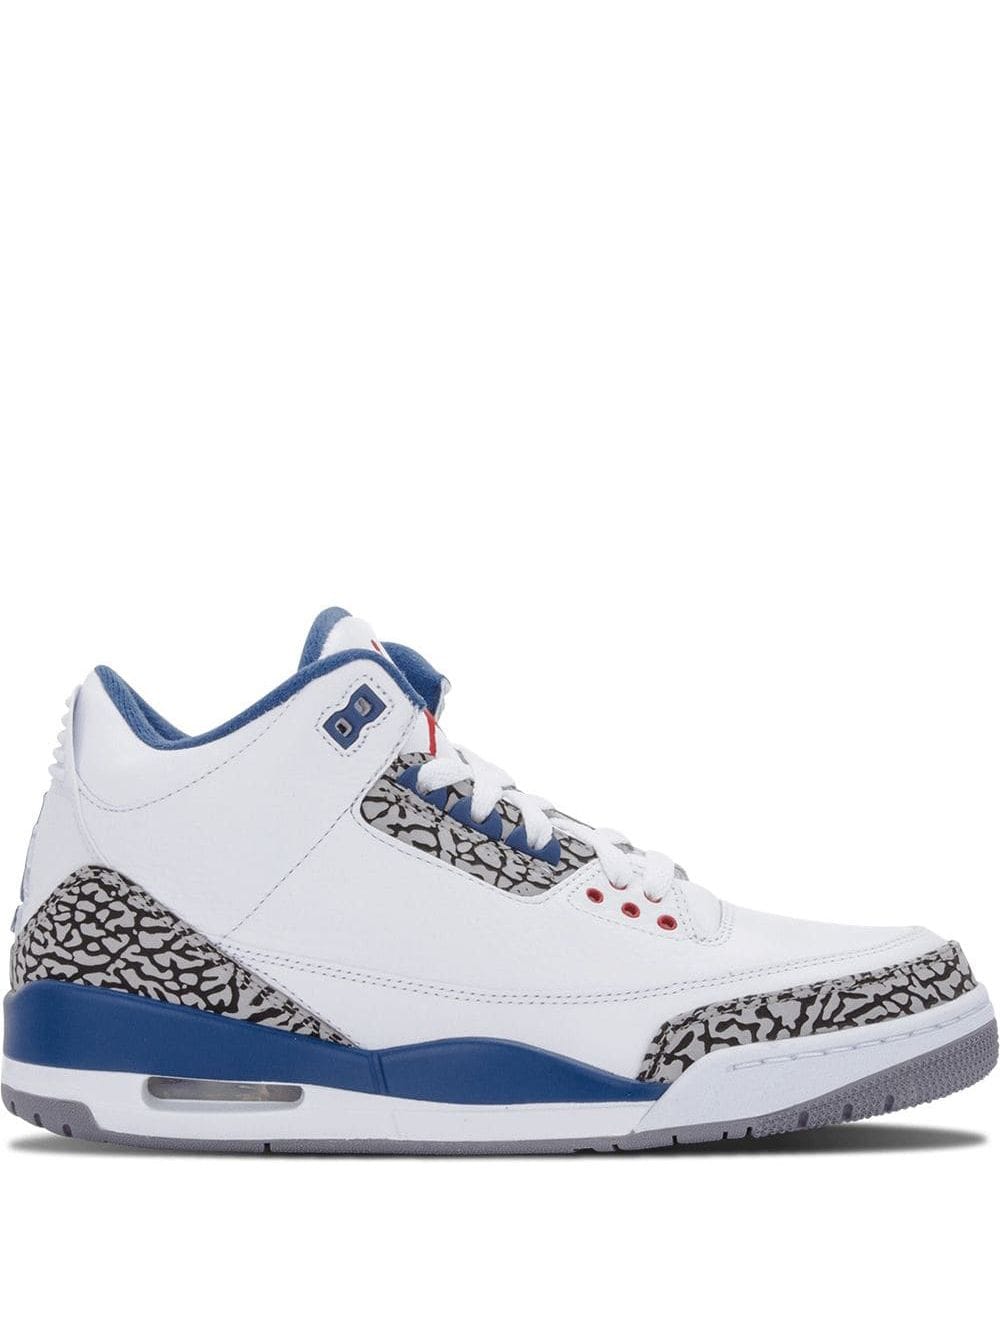 Jordan Air Jordan 3 Retro "True Blue" sneakers - White